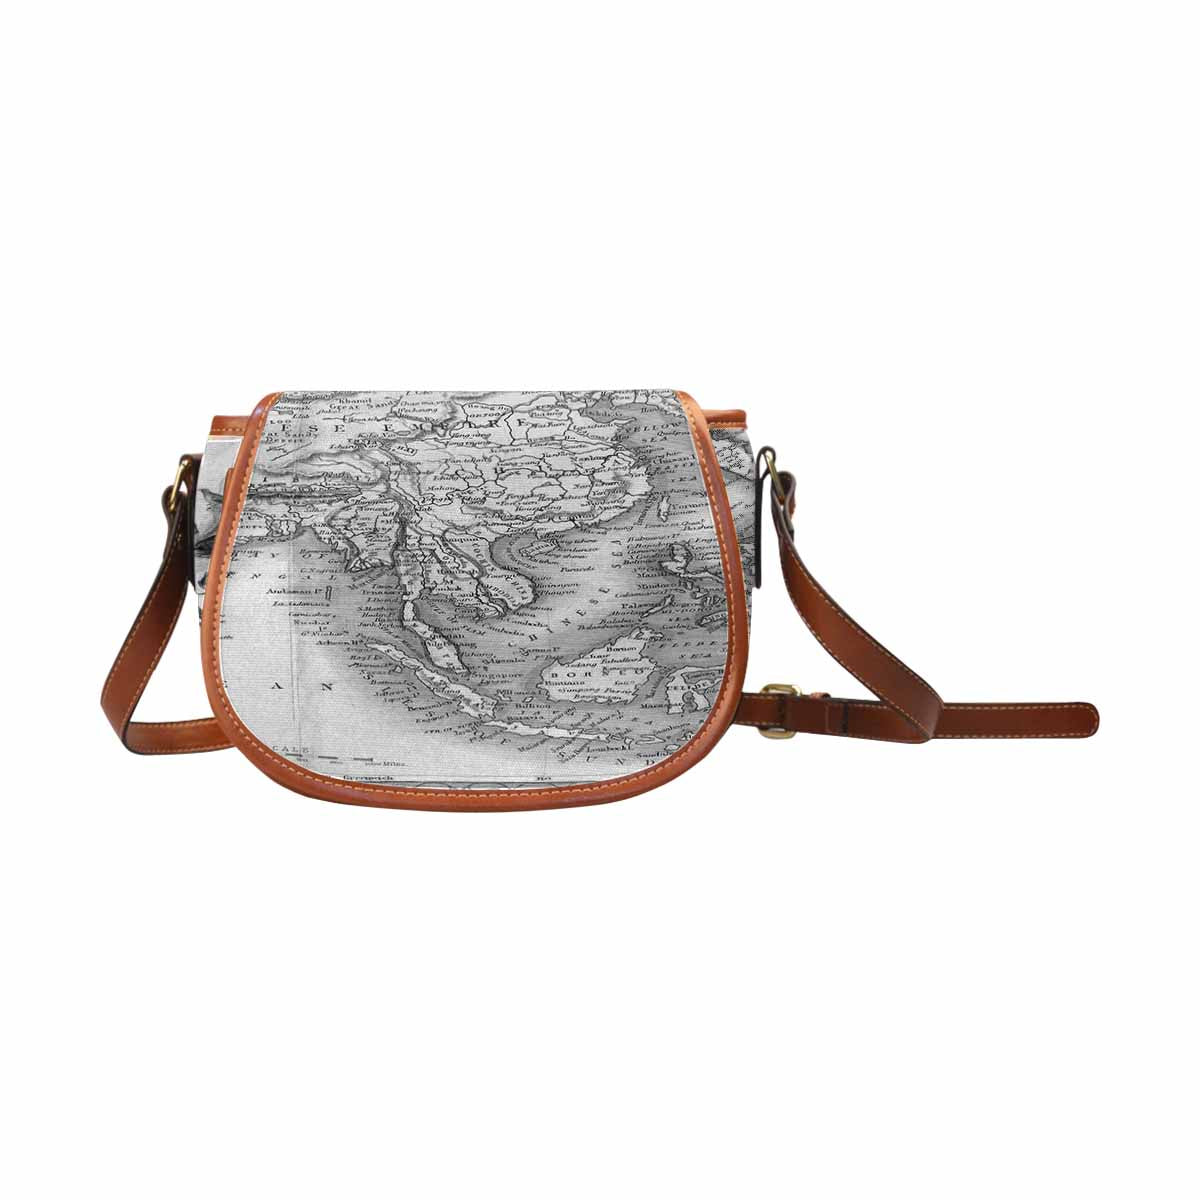 Antique Map design Handbag, saddle bag, Design 35